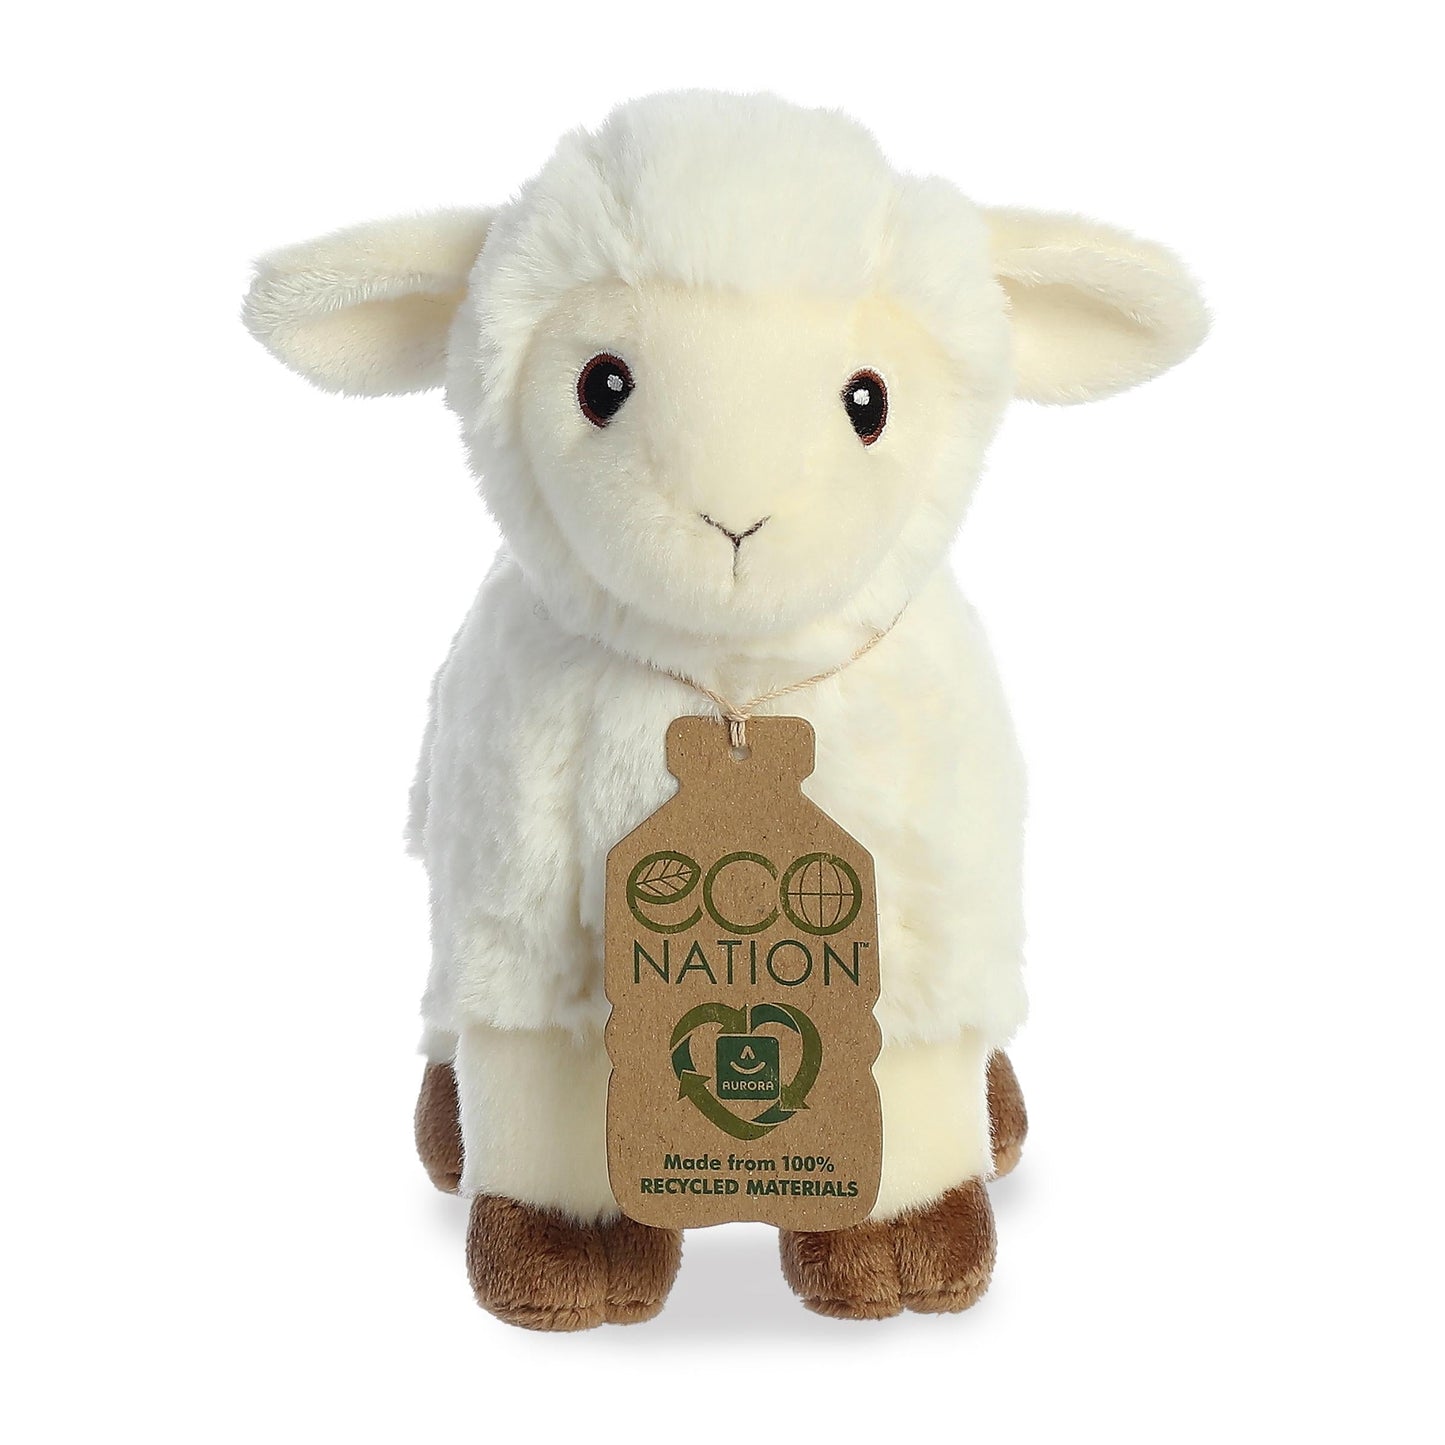 8" Lamb Eco Nation